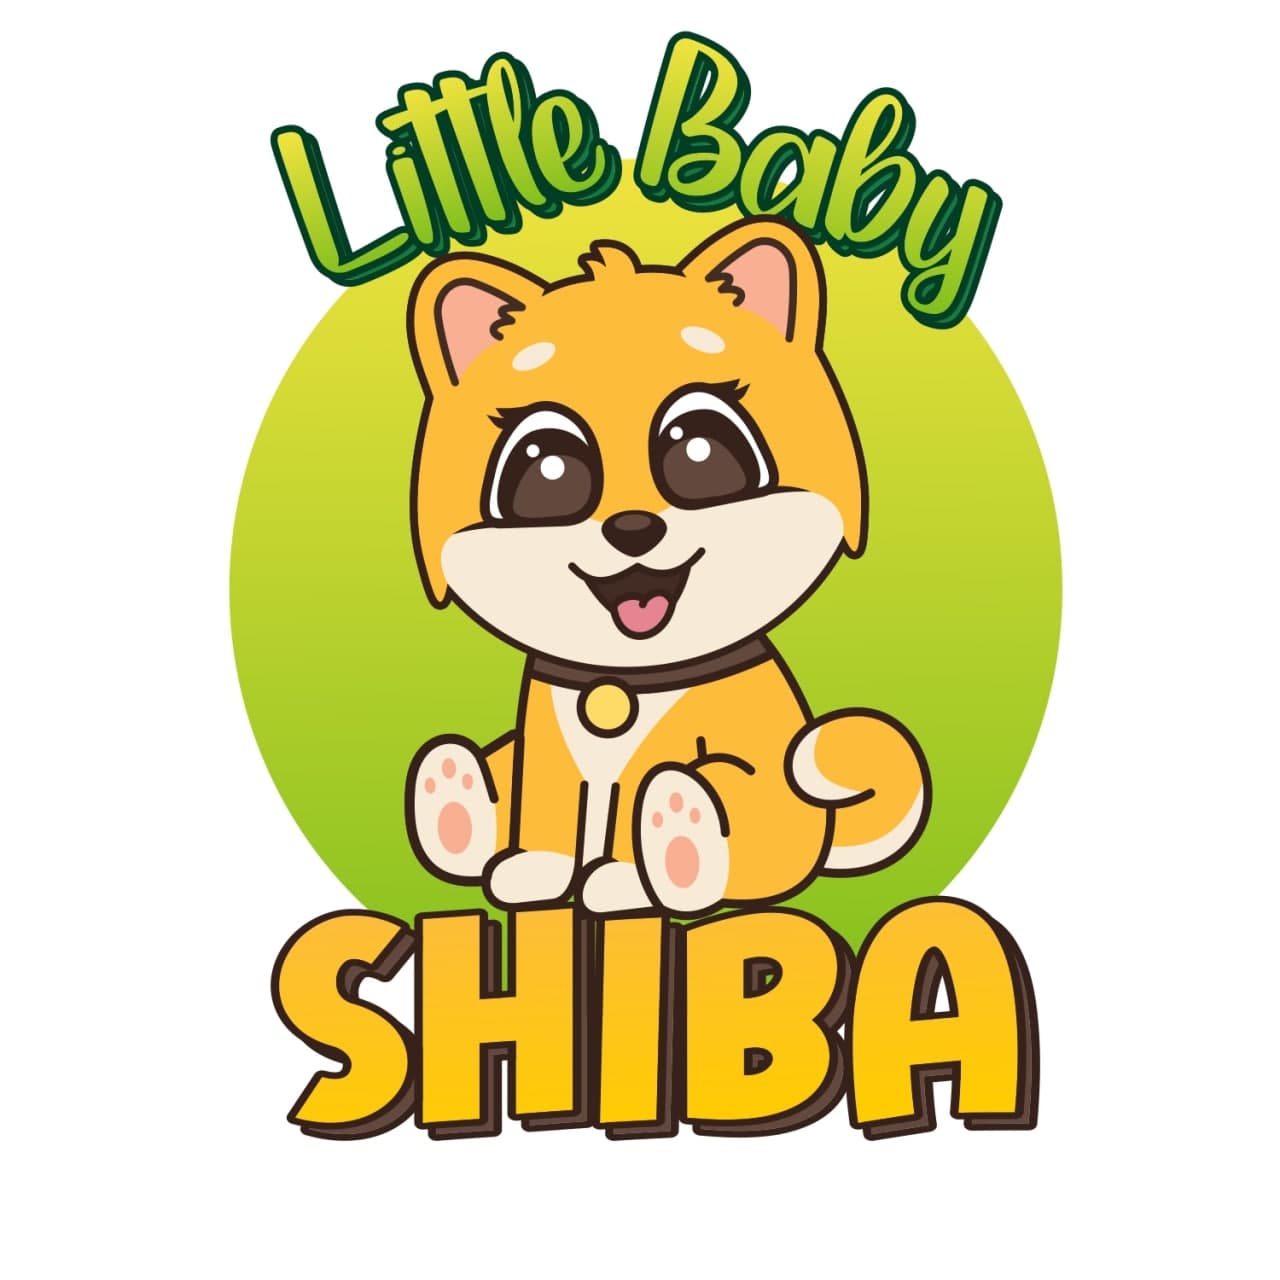 Little Baby Shiba logo